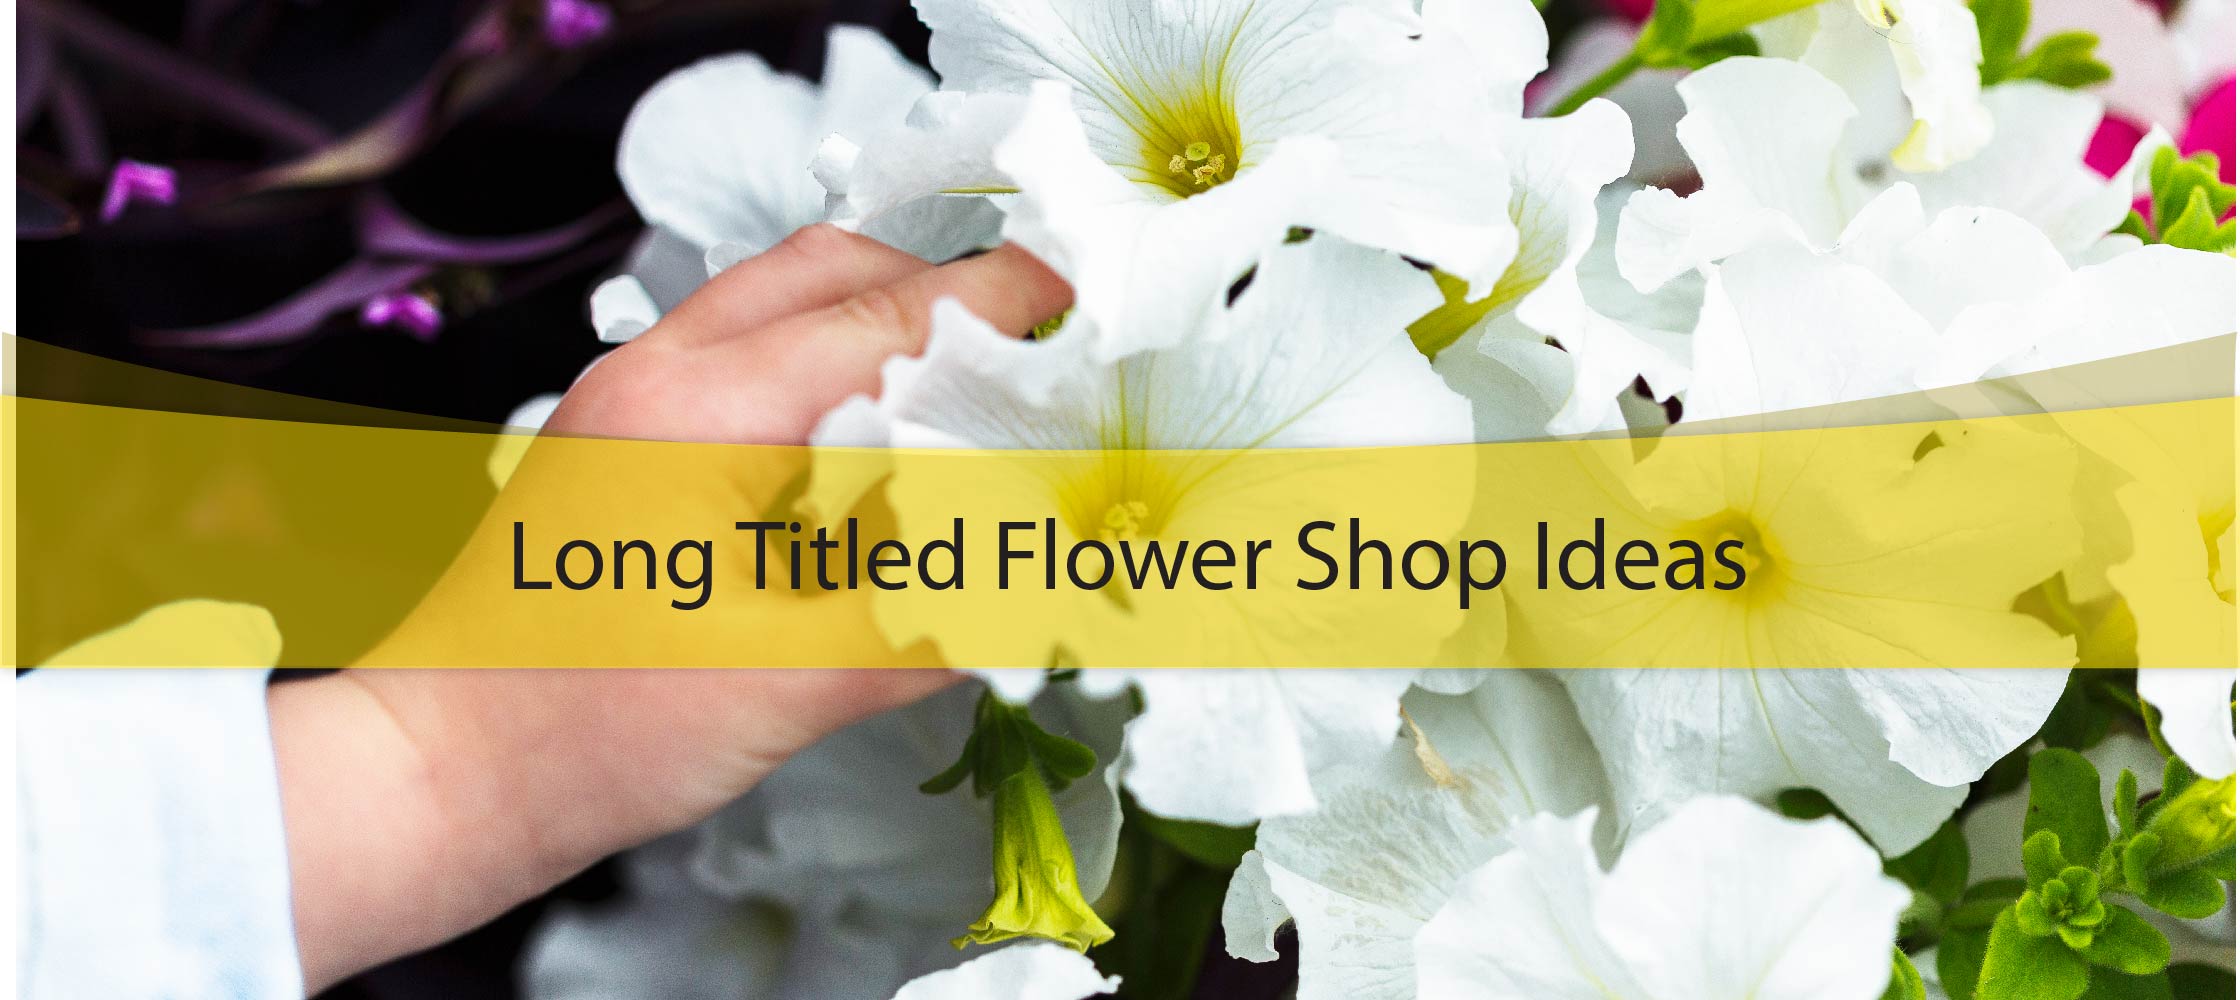 Long Titled Flower Shop Ideas